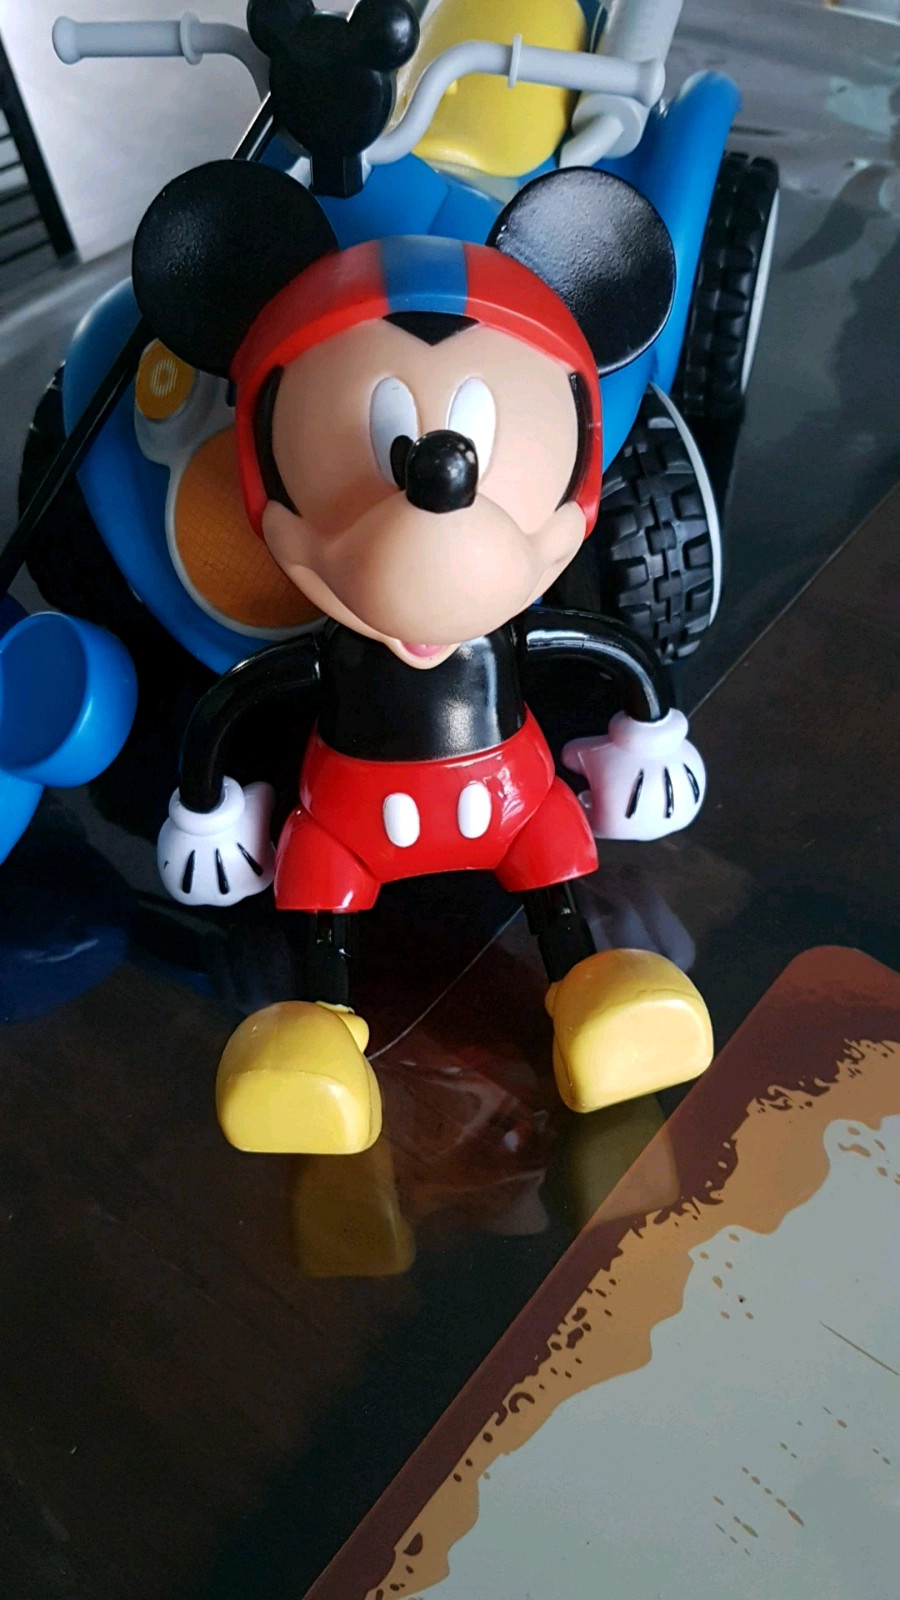 Disney Store Voiture télécommandée Mickey